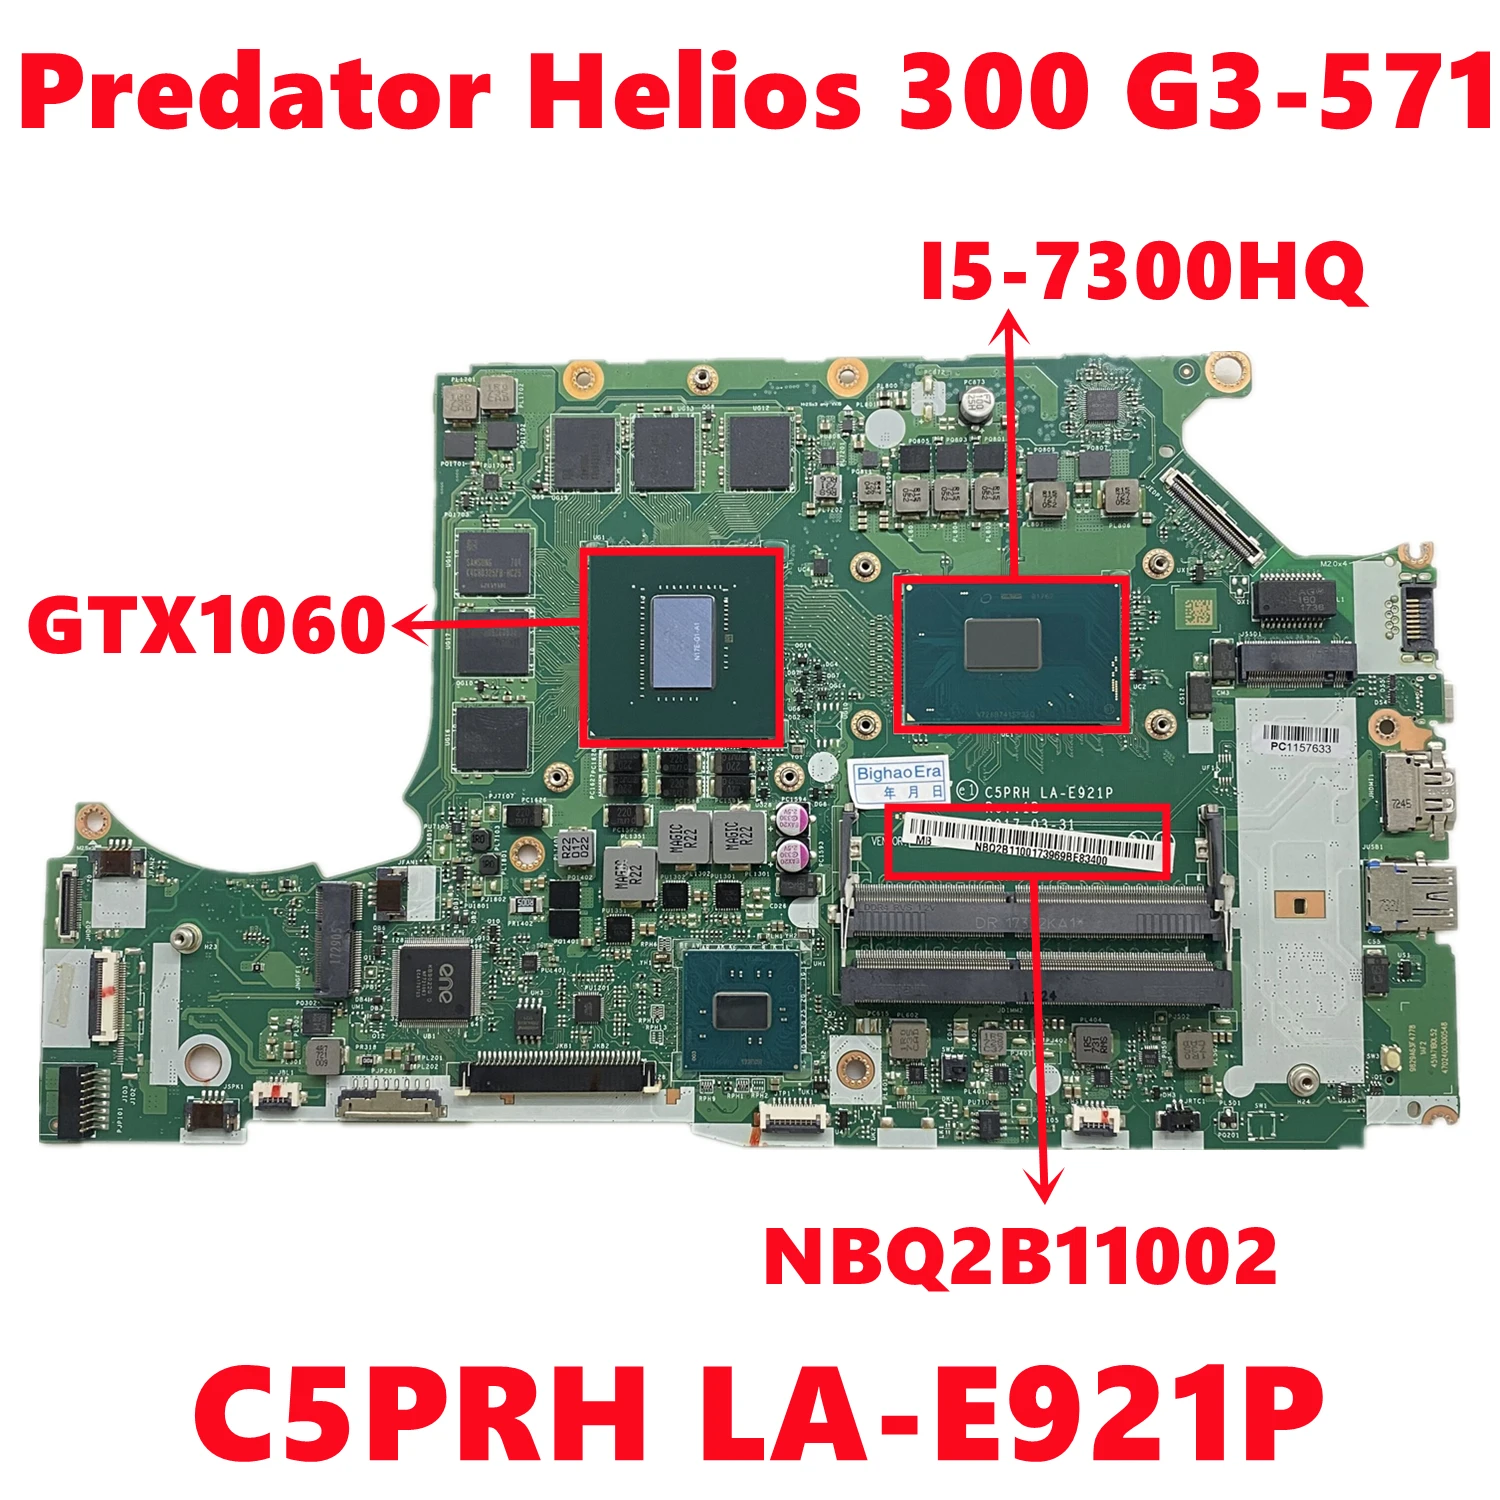 

NBQ2B11002 NB.Q2B11.002 For Acer Predator Helios 300 G3-571 Laptop Motherboard C5PRH LA-E921P With i5-7300HQ N17E-G1-A1 100%Test